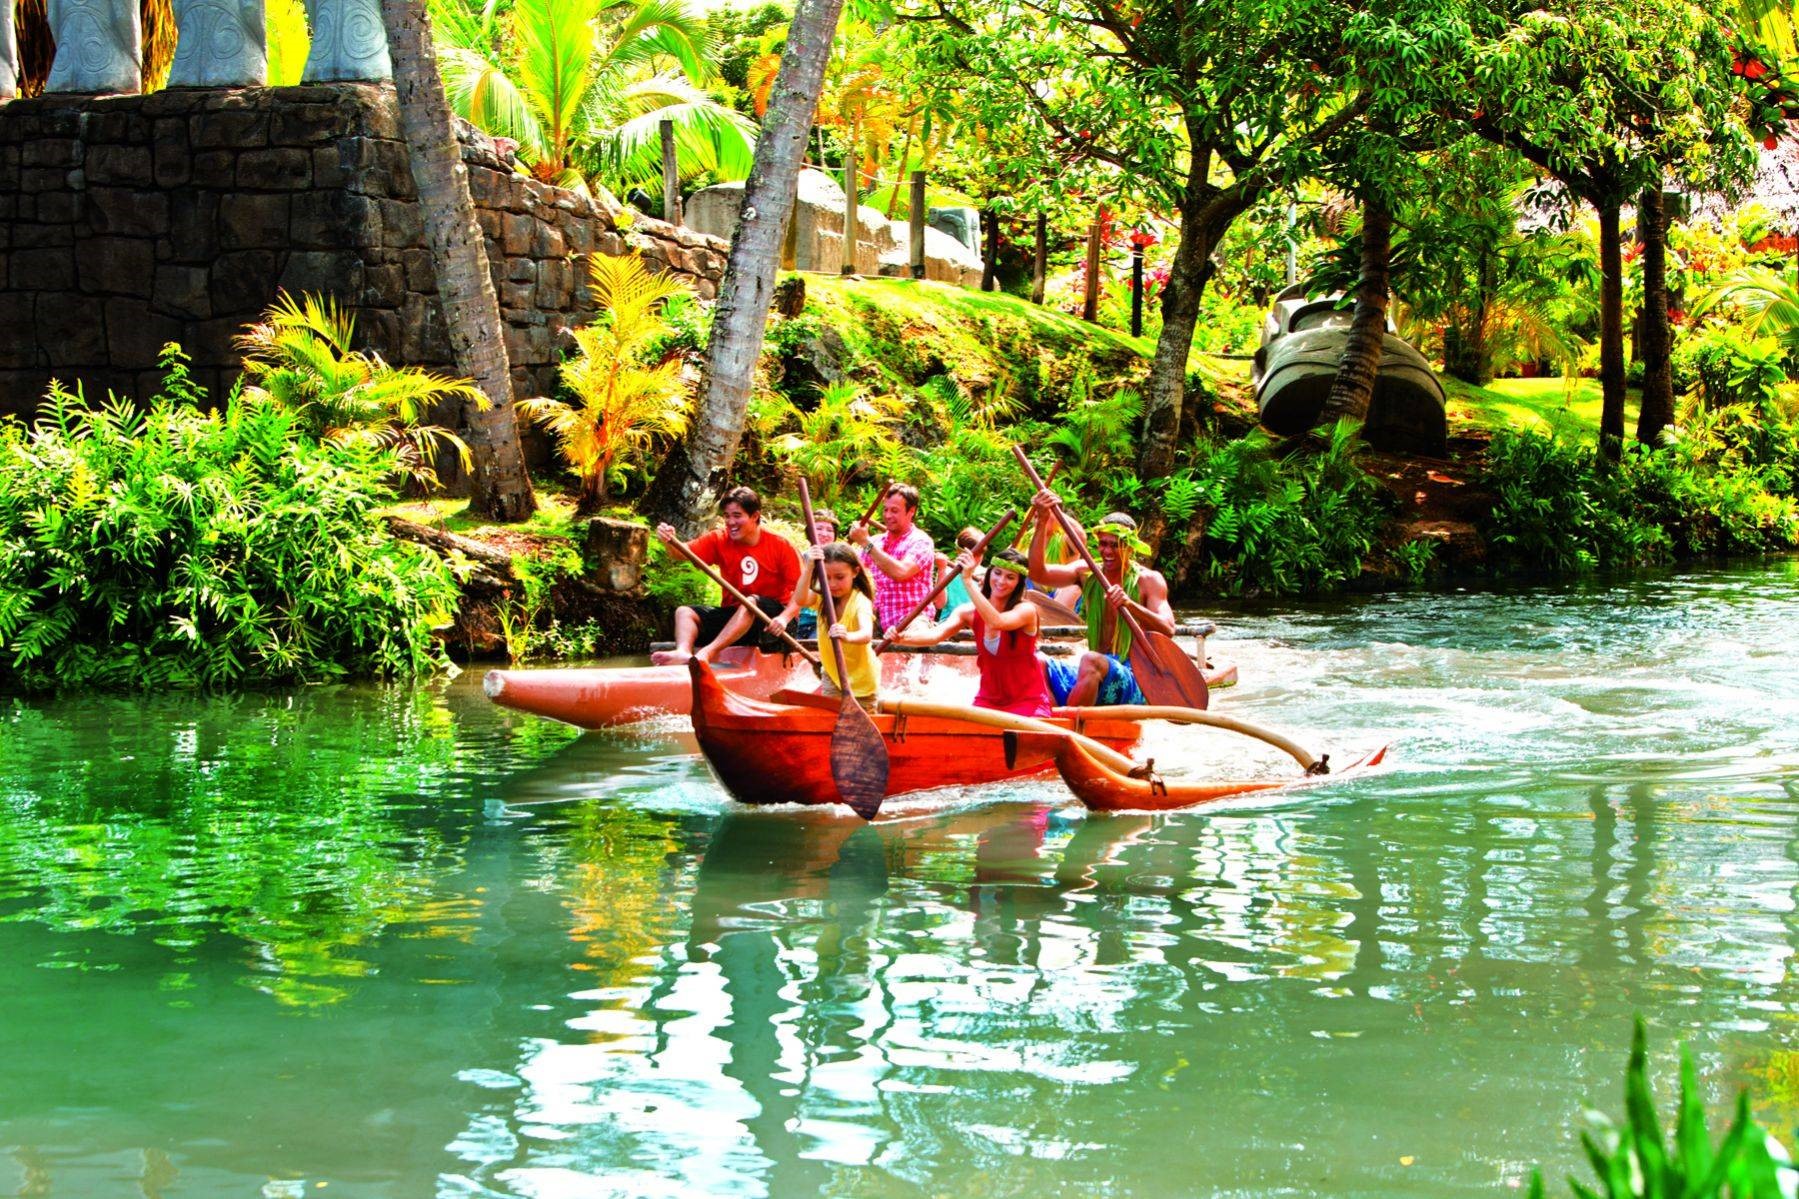 Visitors can paddle canoes around lagoon at PCC